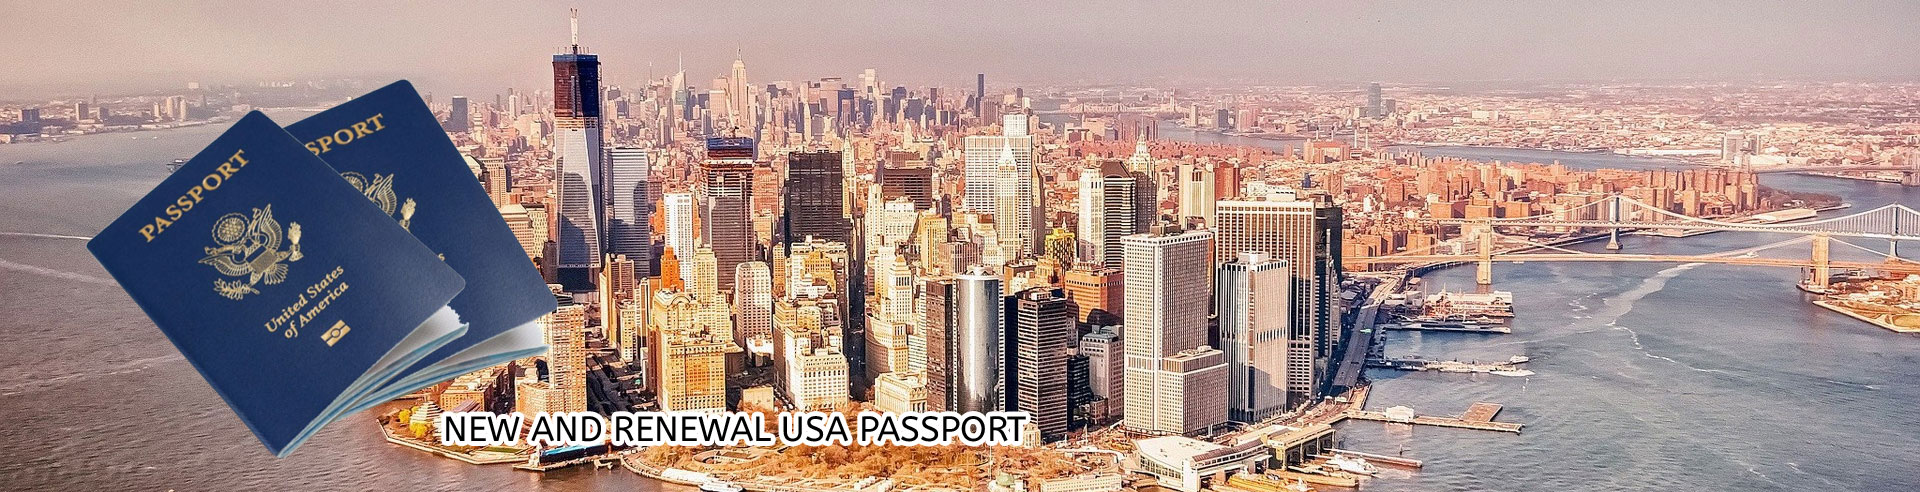 New And Renewal USA Passport